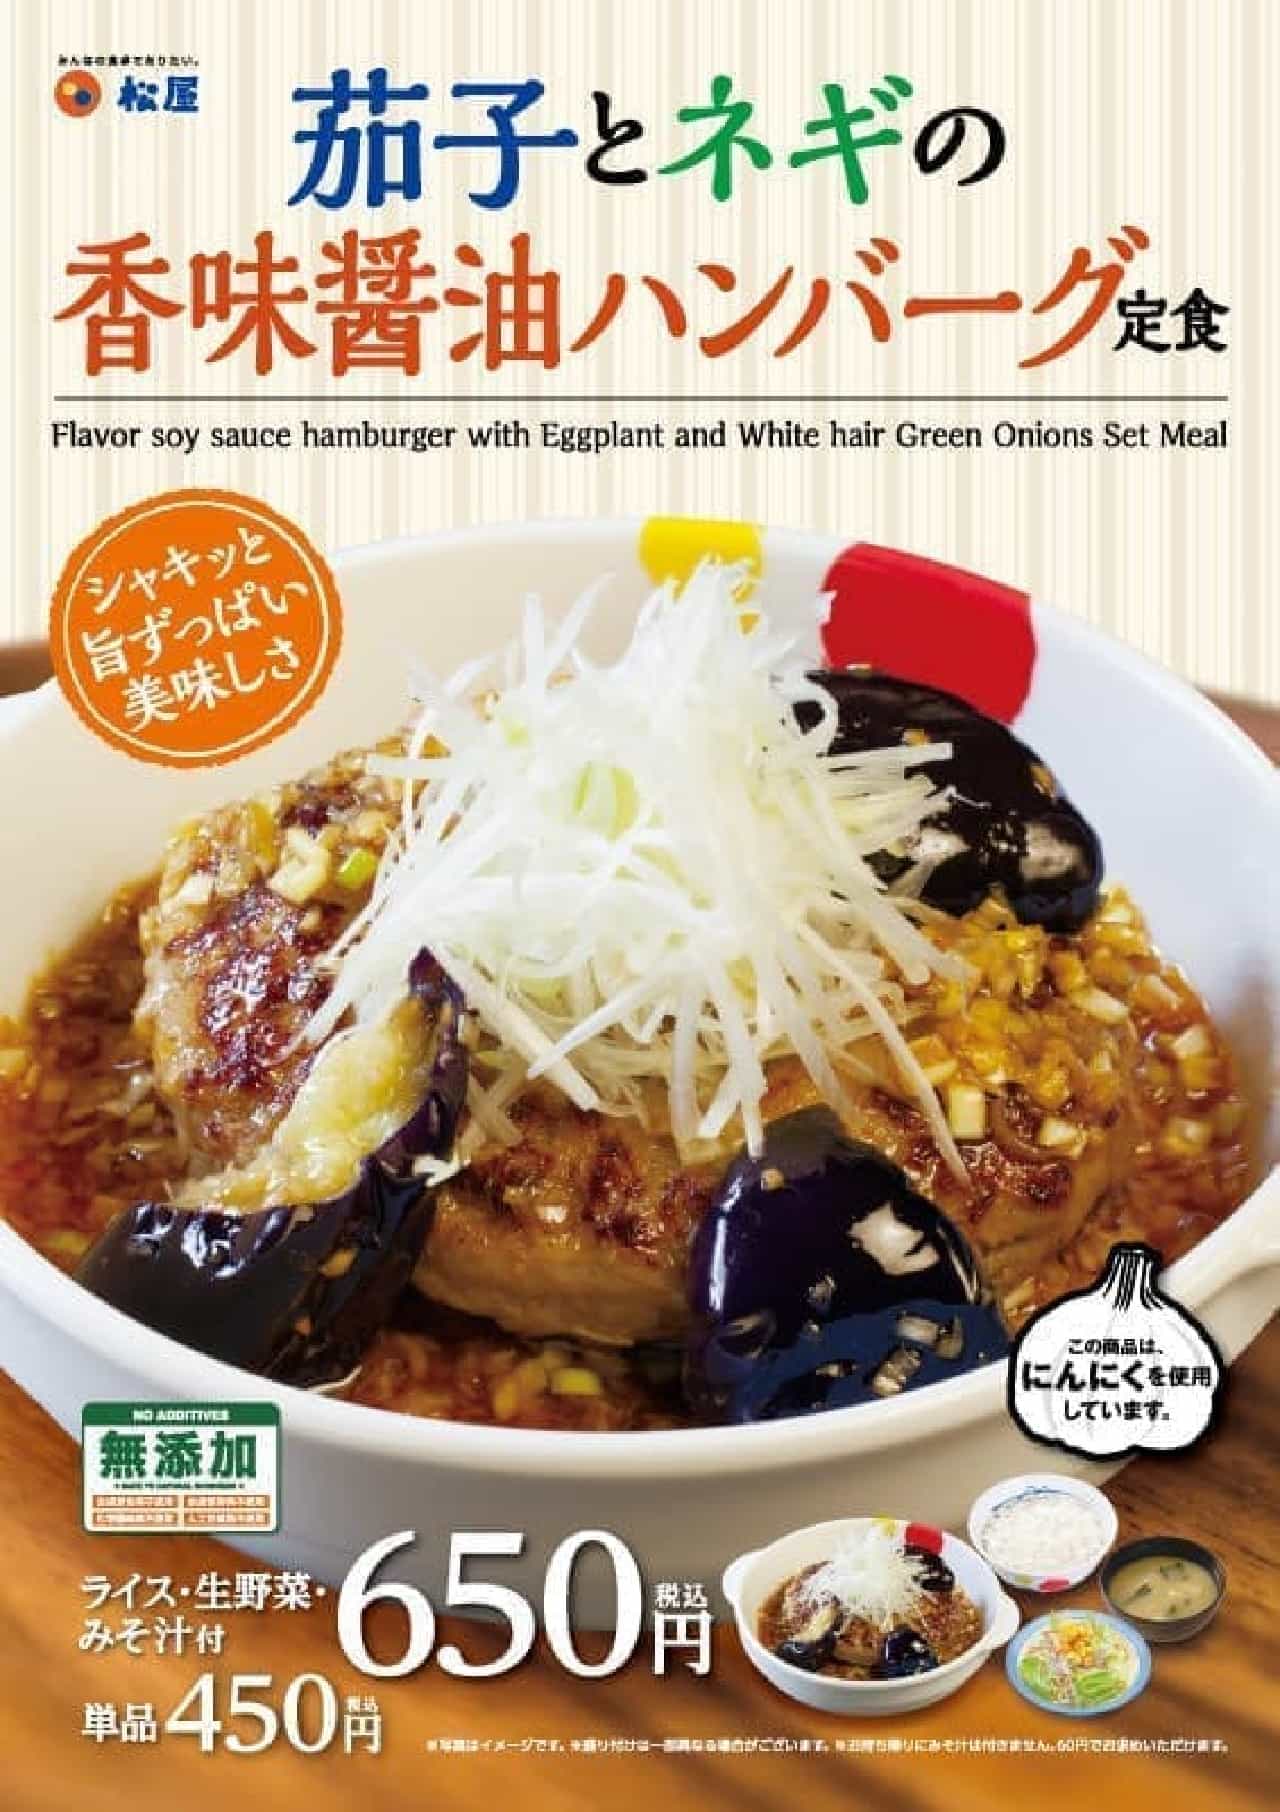 Matsuya's menu "Eggplant and green onion flavored soy sauce hamburger set meal"